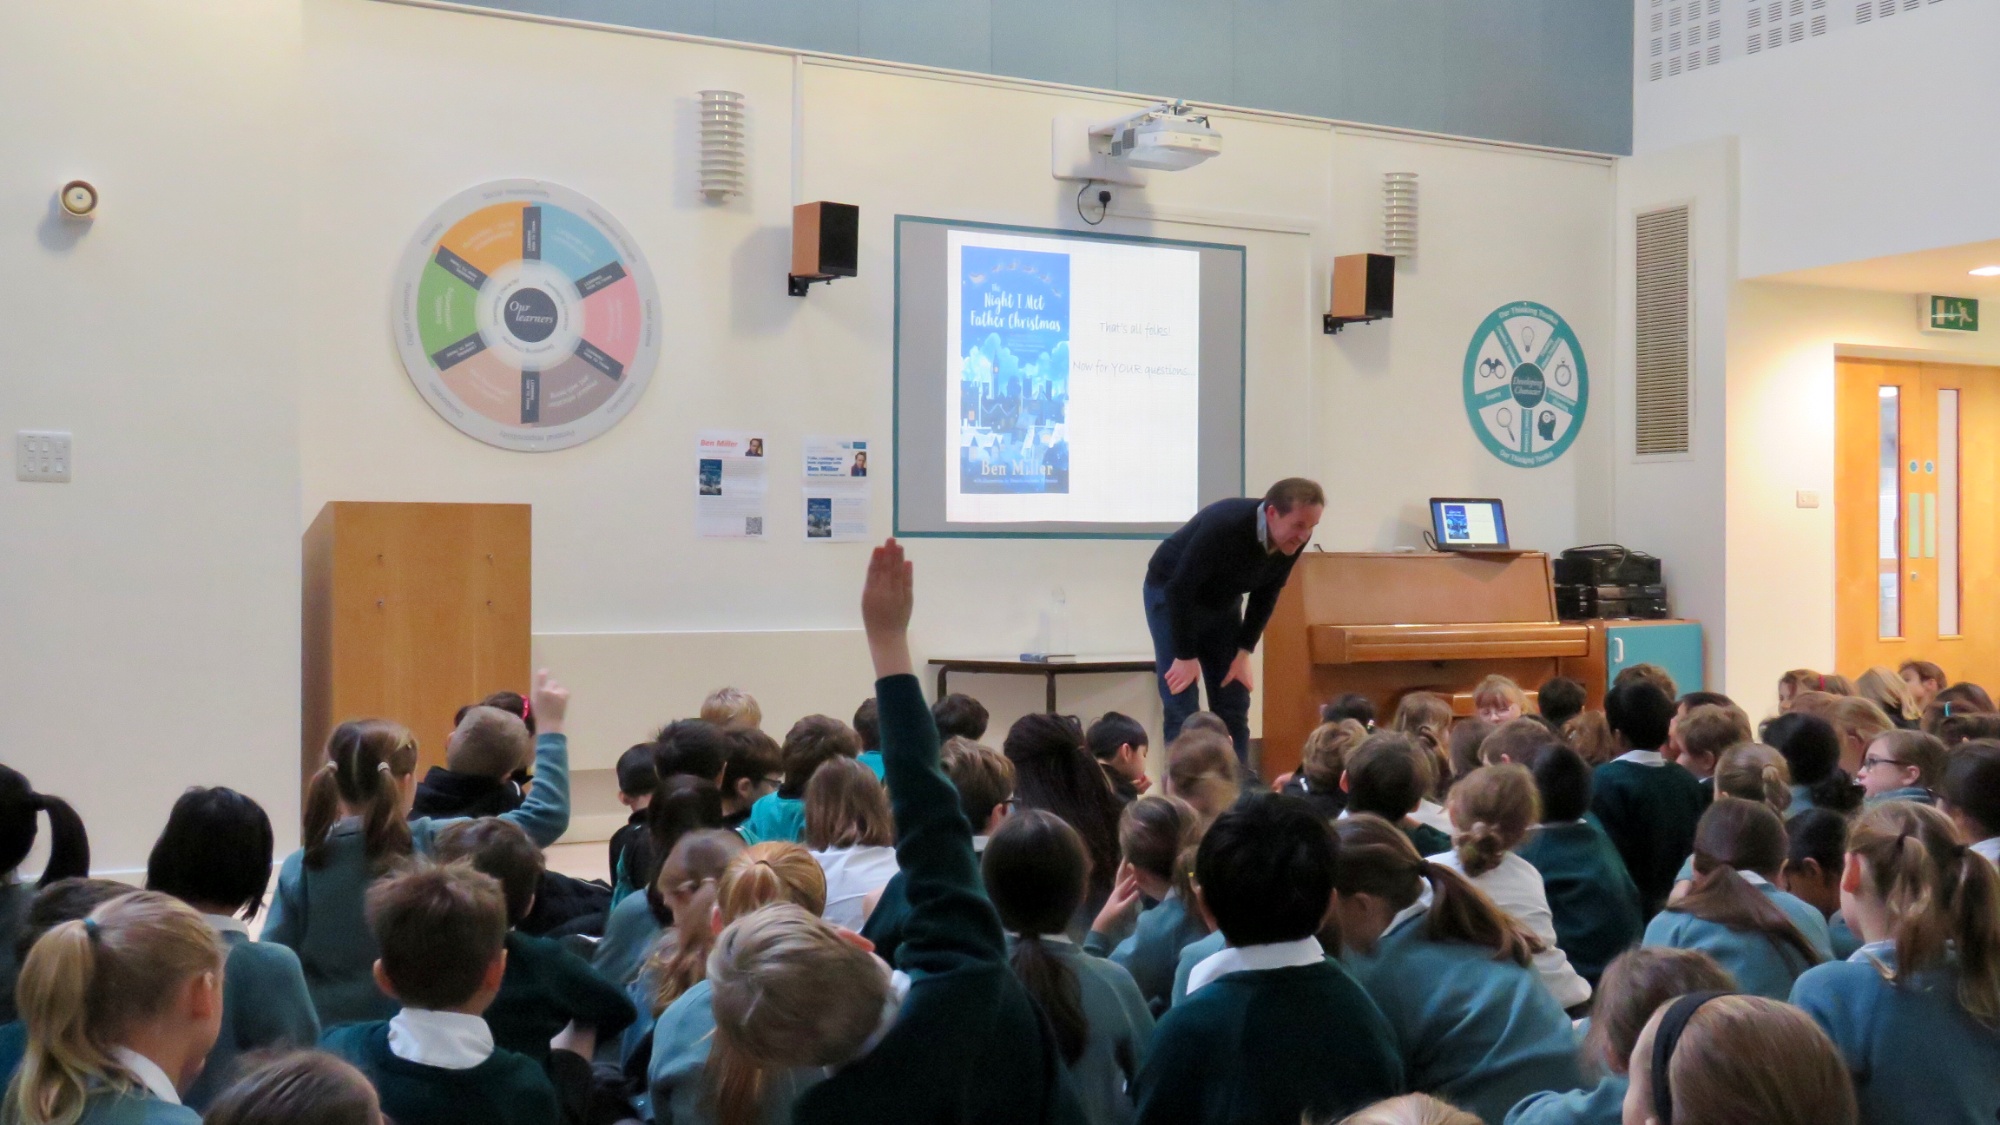 Ben Miller answers questions from Junior School pupils